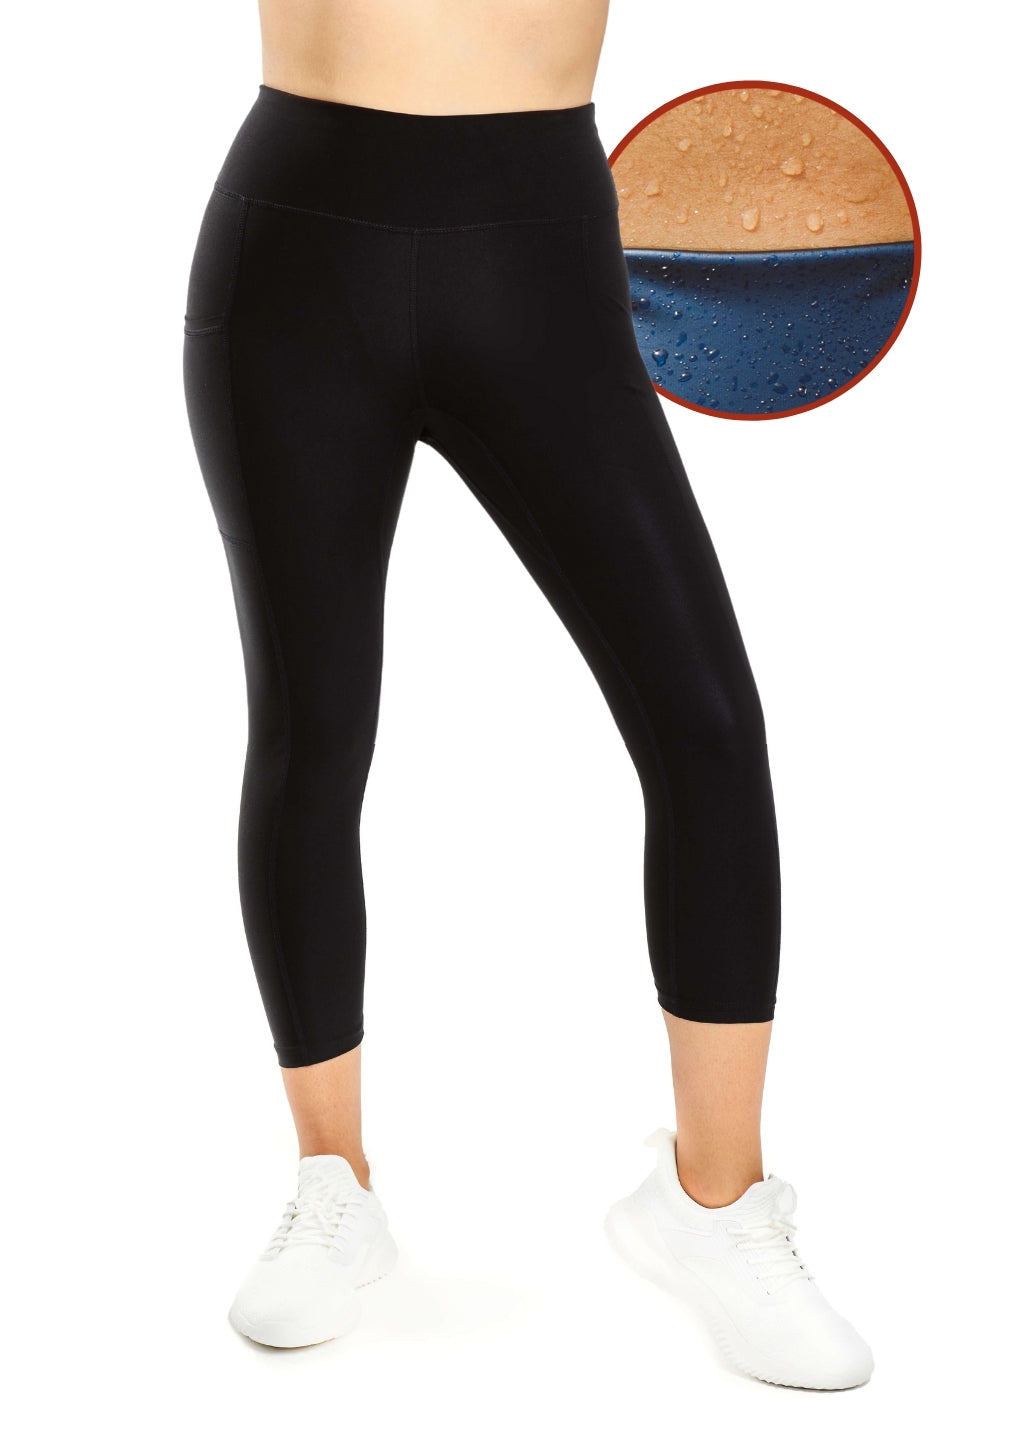 Augper Women's Super High Waist Yoga Pants Slant Pockets Fitness Running  Training Stretch Quick Dry Tight Sports Pants 